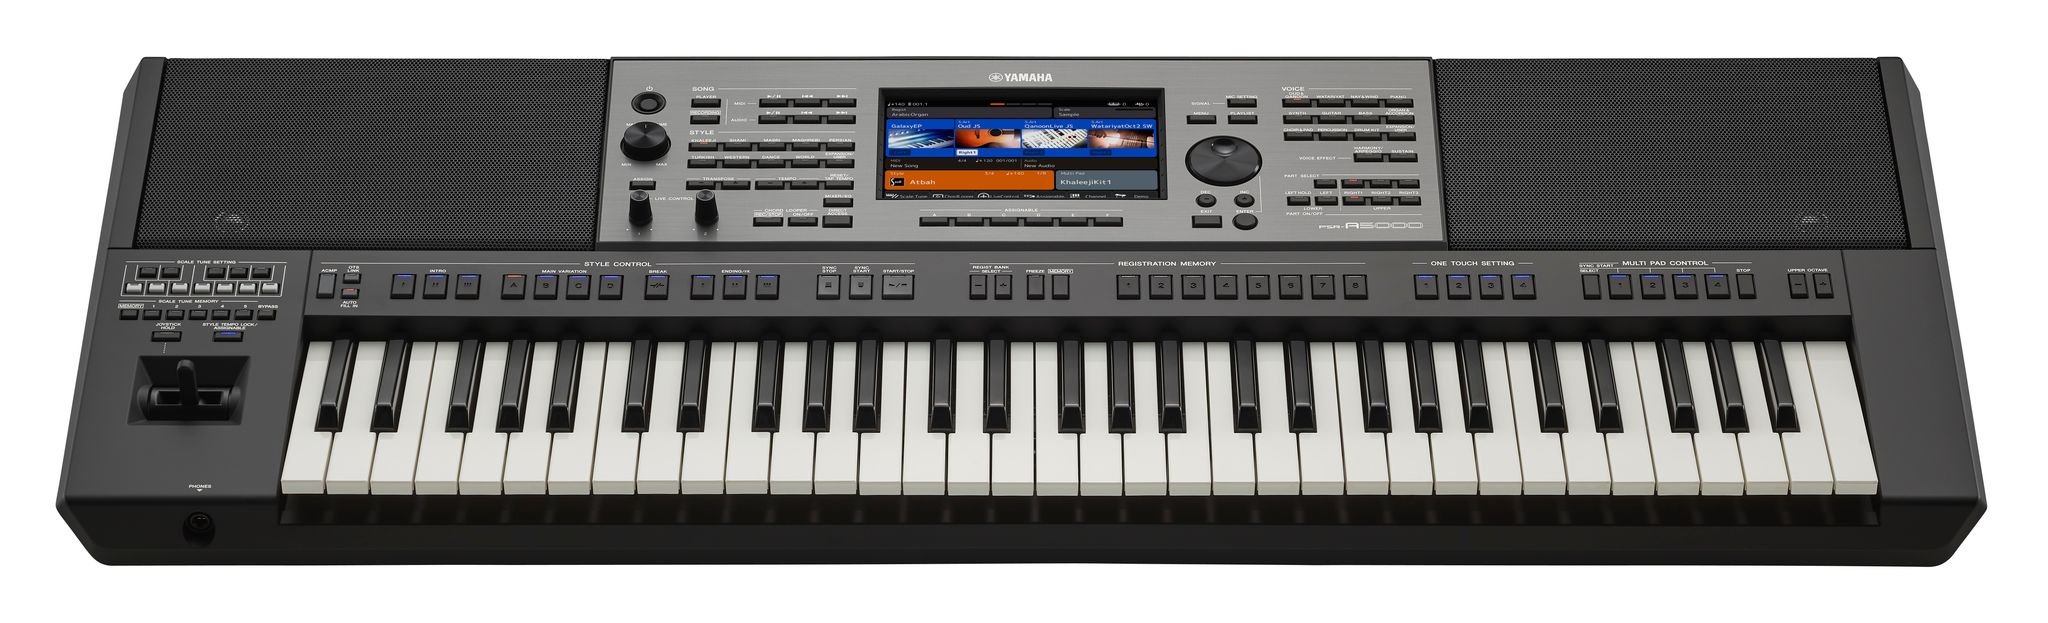 Yamaha Psr-a5000 - Entertainer Keyboard - Variation 3